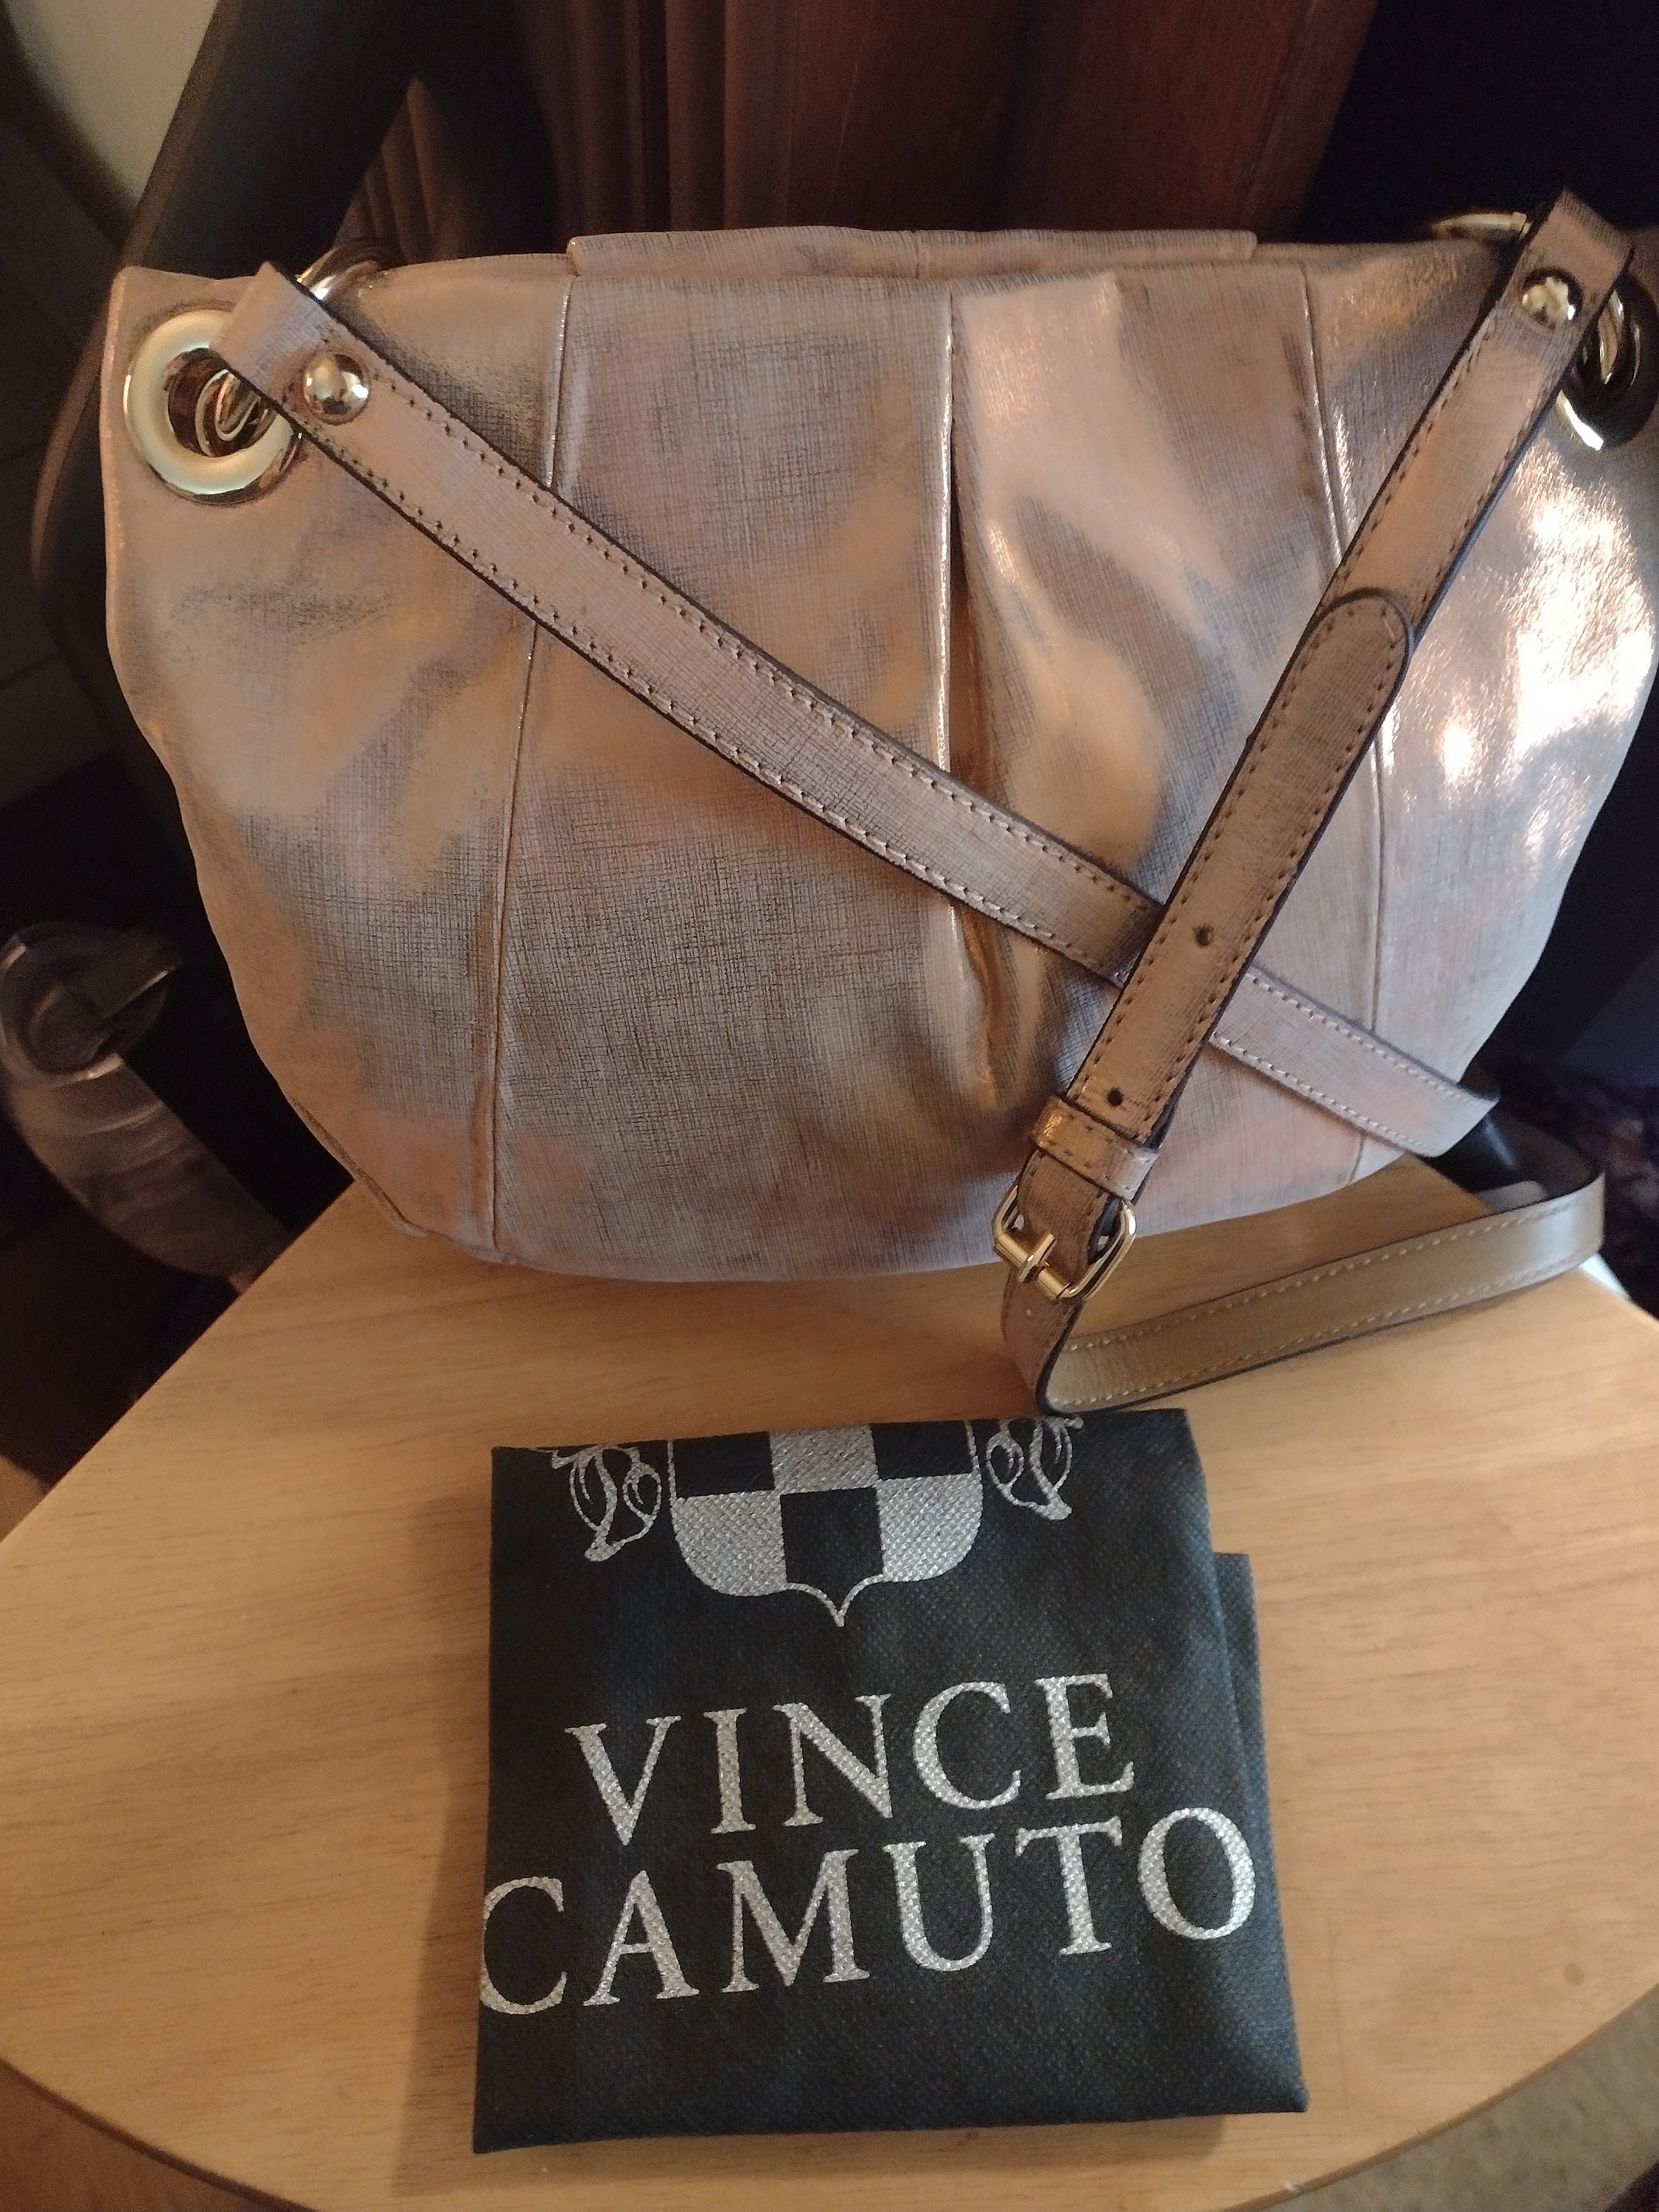 Pin on Vince Camuto Handbags And Vince Camuto Bags!